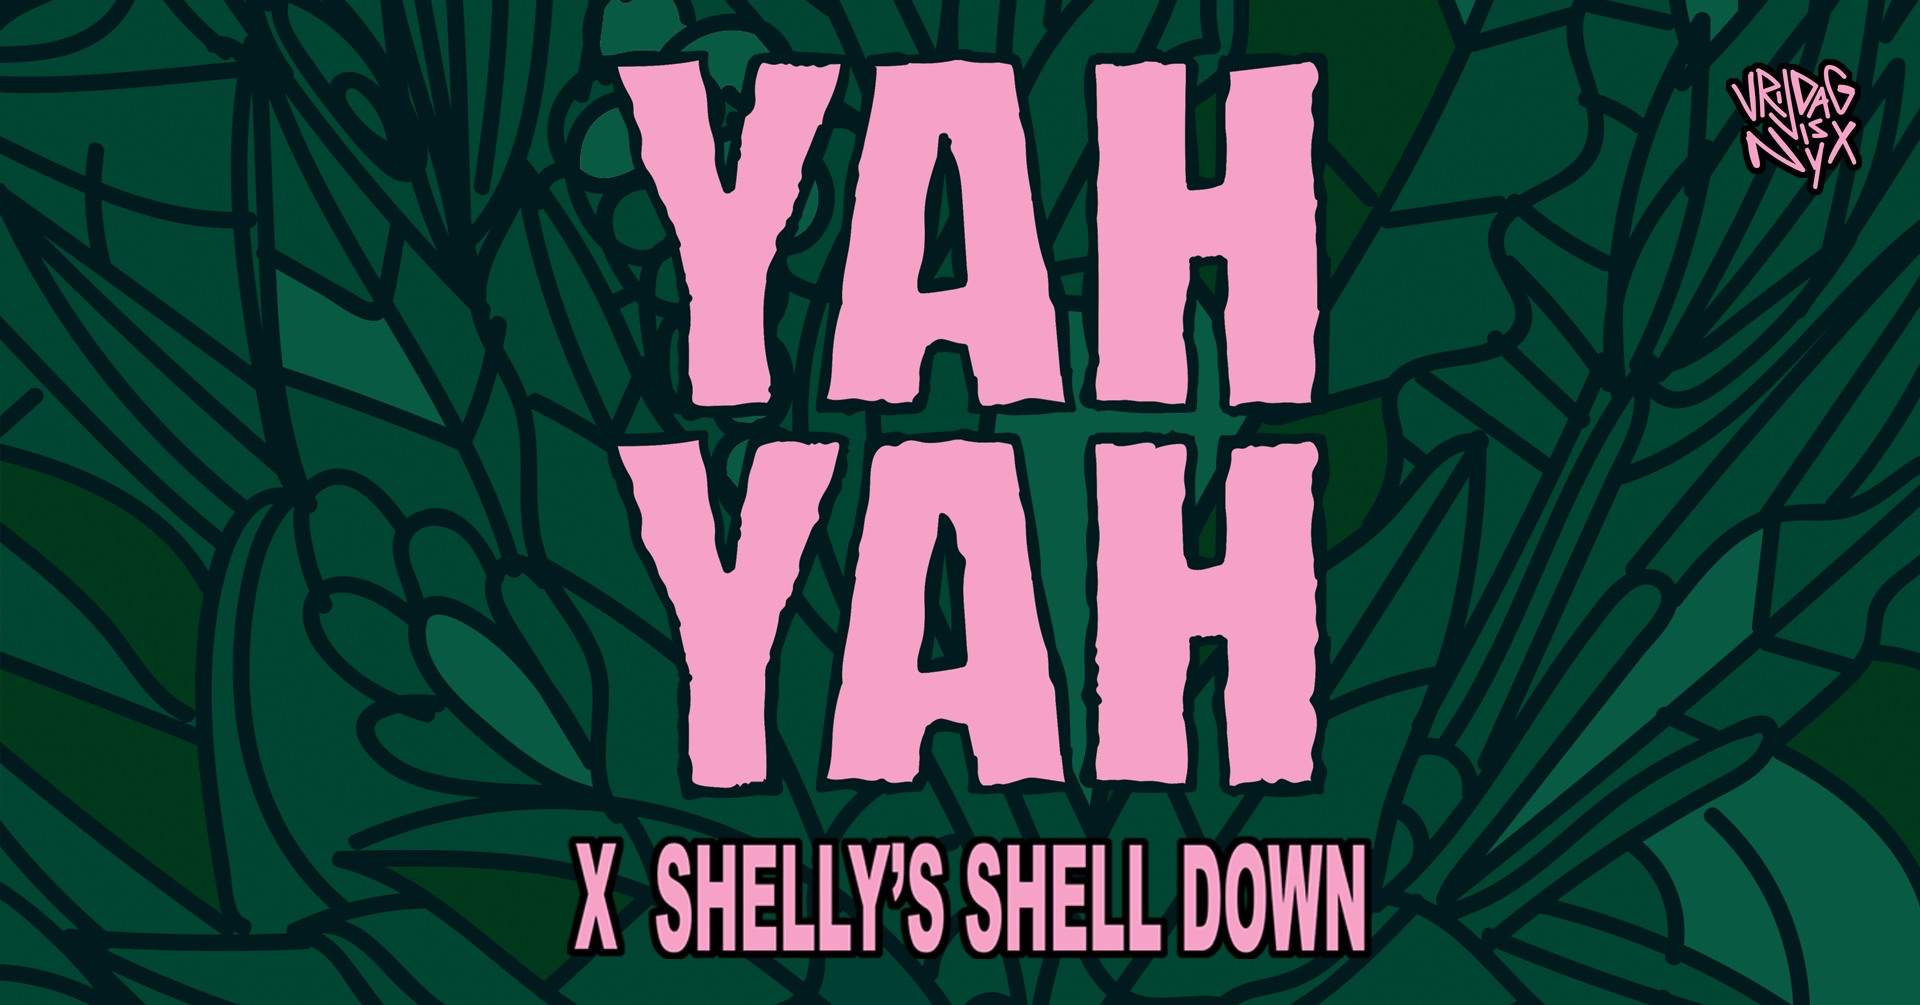 Vrijdag is NYX: YAH YAH x Shelly's Shell Down - フライヤー表